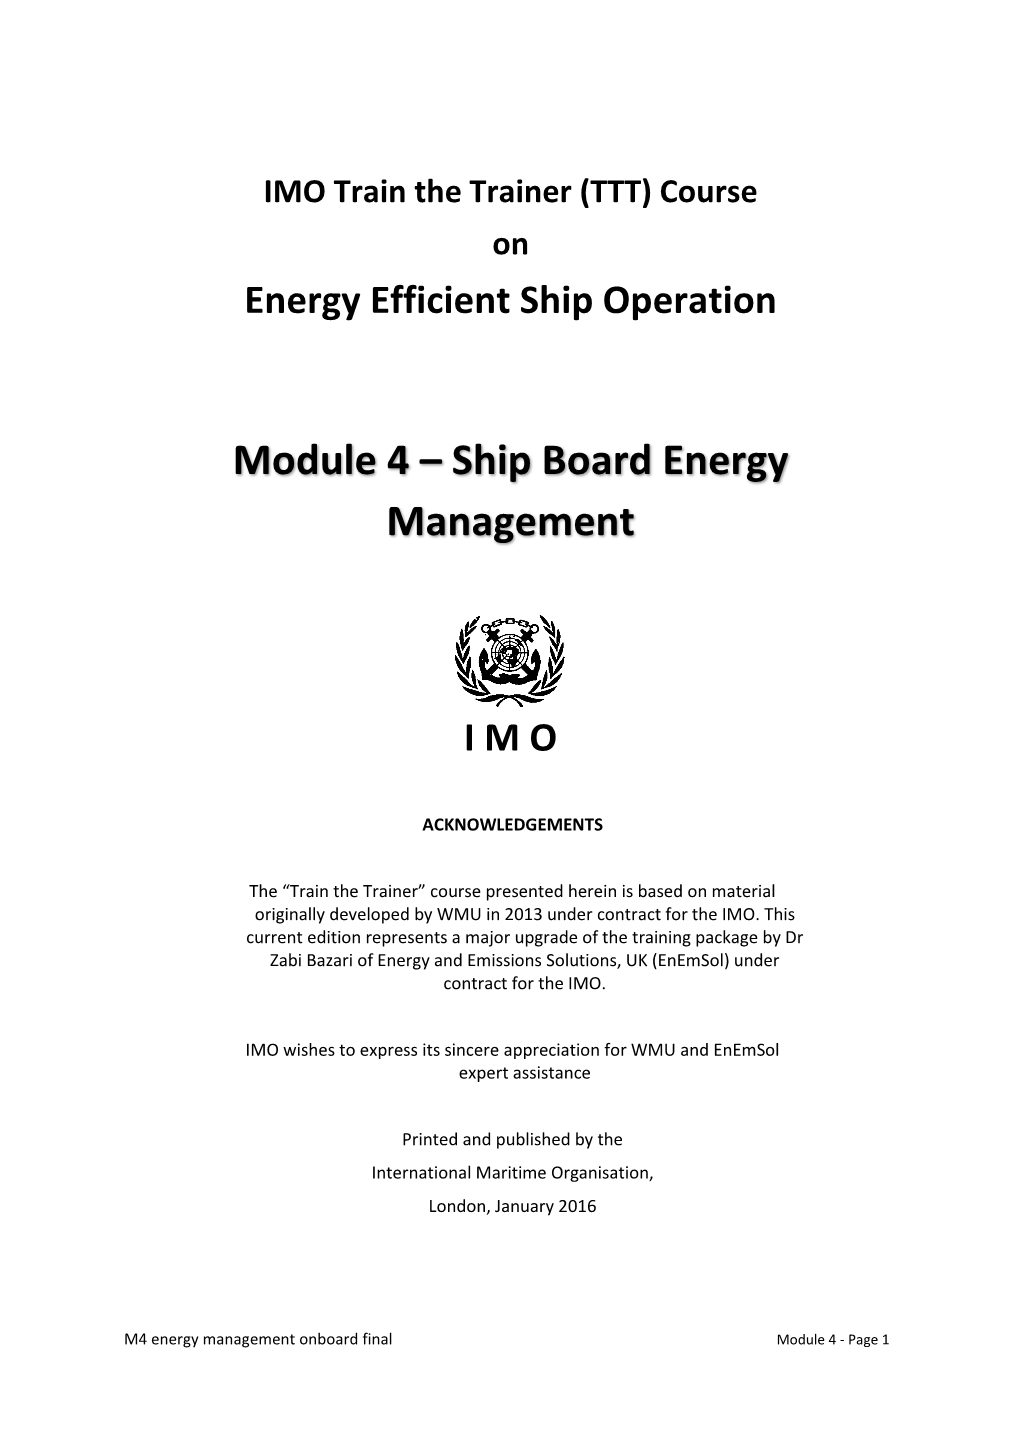 Ship Board Energy Management